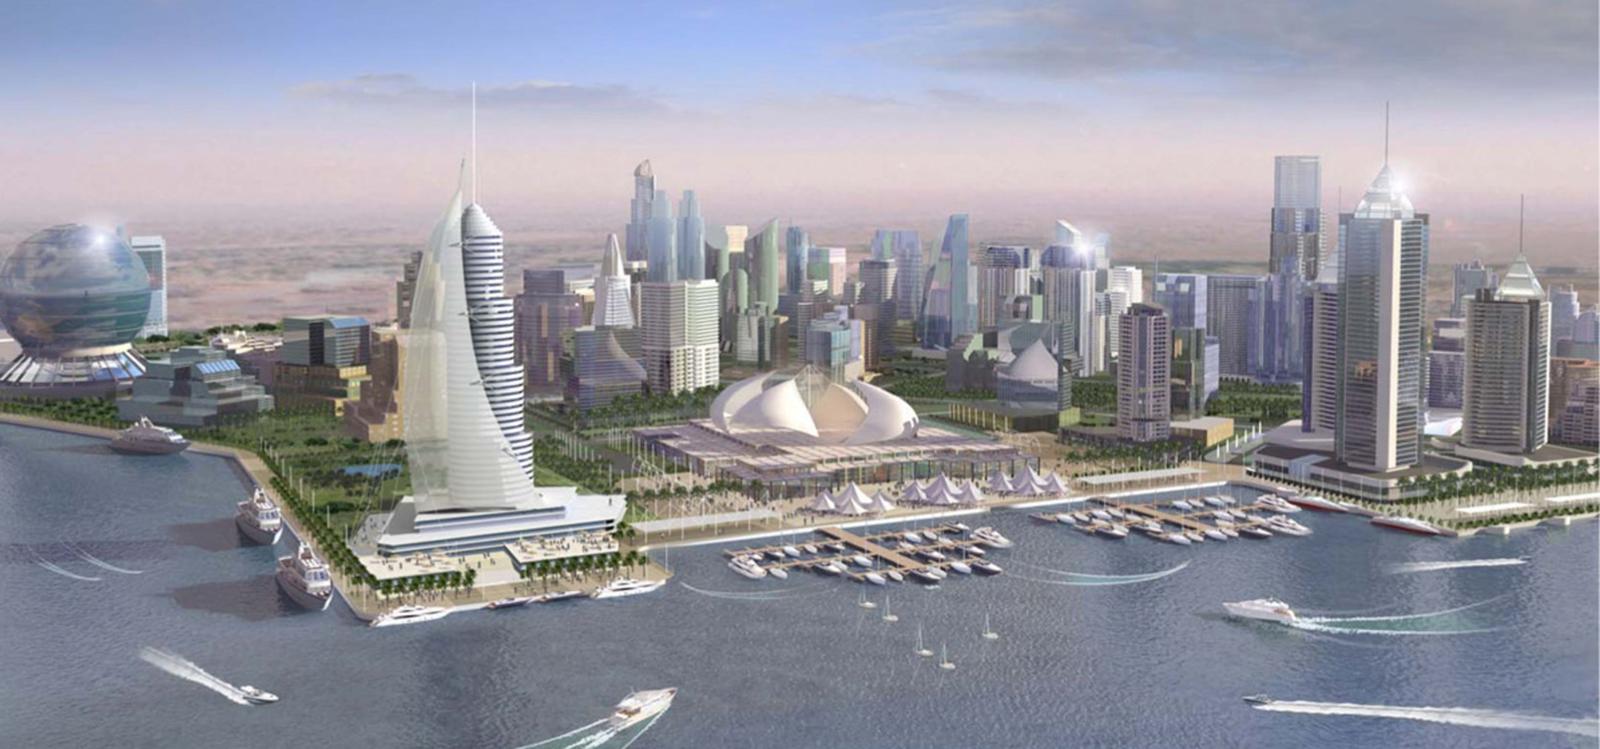 P-ID:69-Lusail Marina District, Doha, Qatar